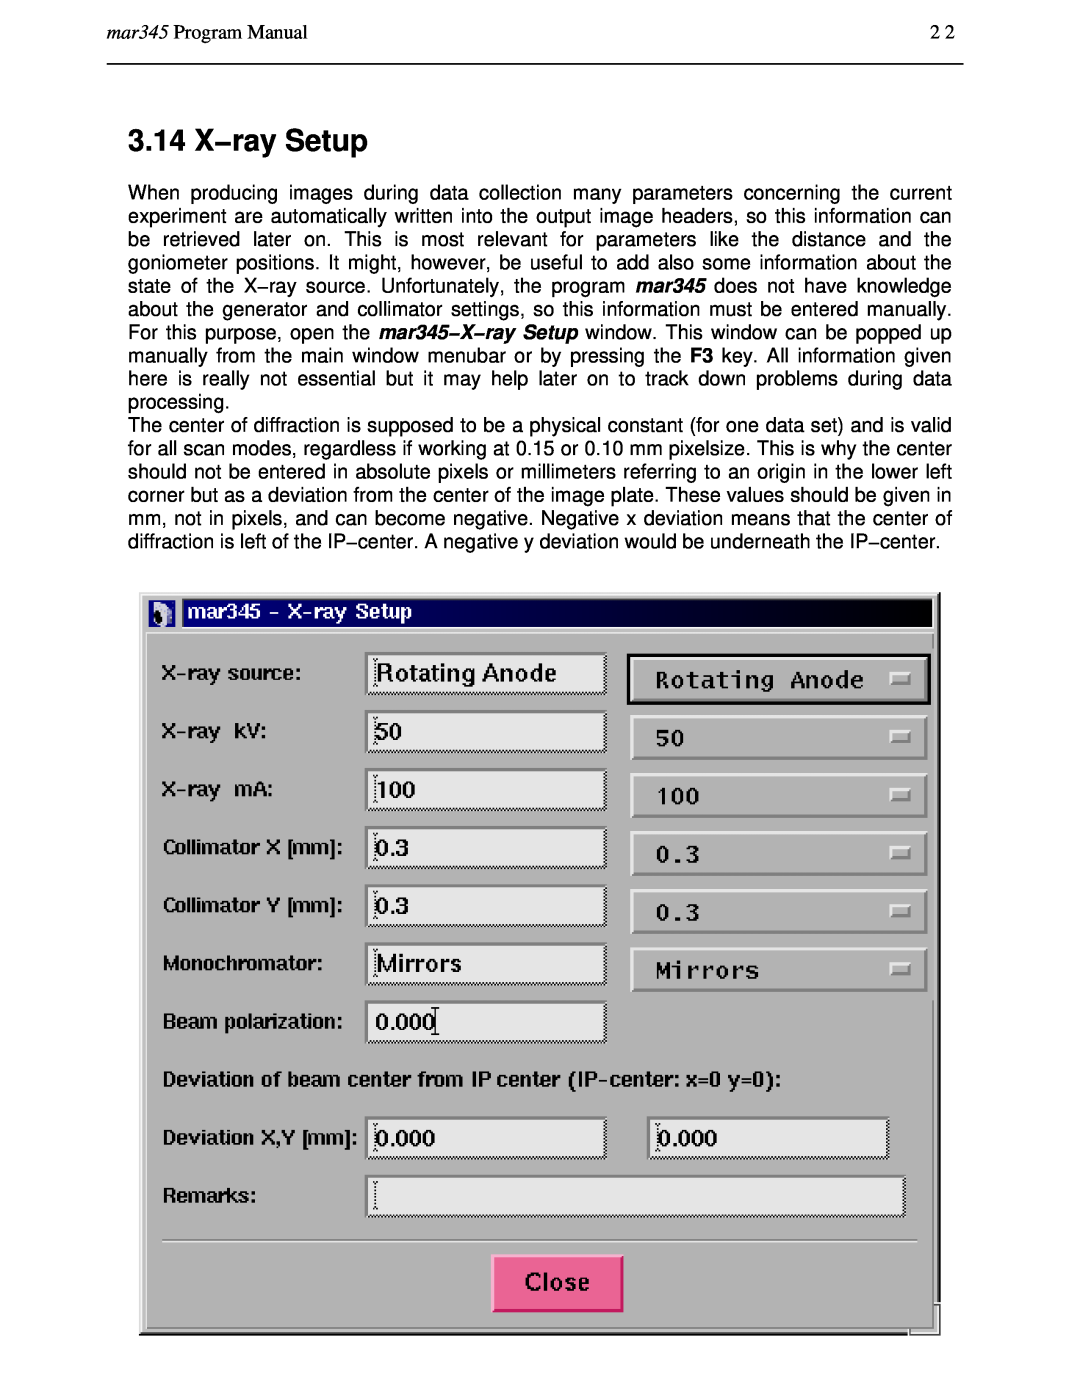 Compaq manual 3.14 X−ray Setup, mar345 Program Manual 